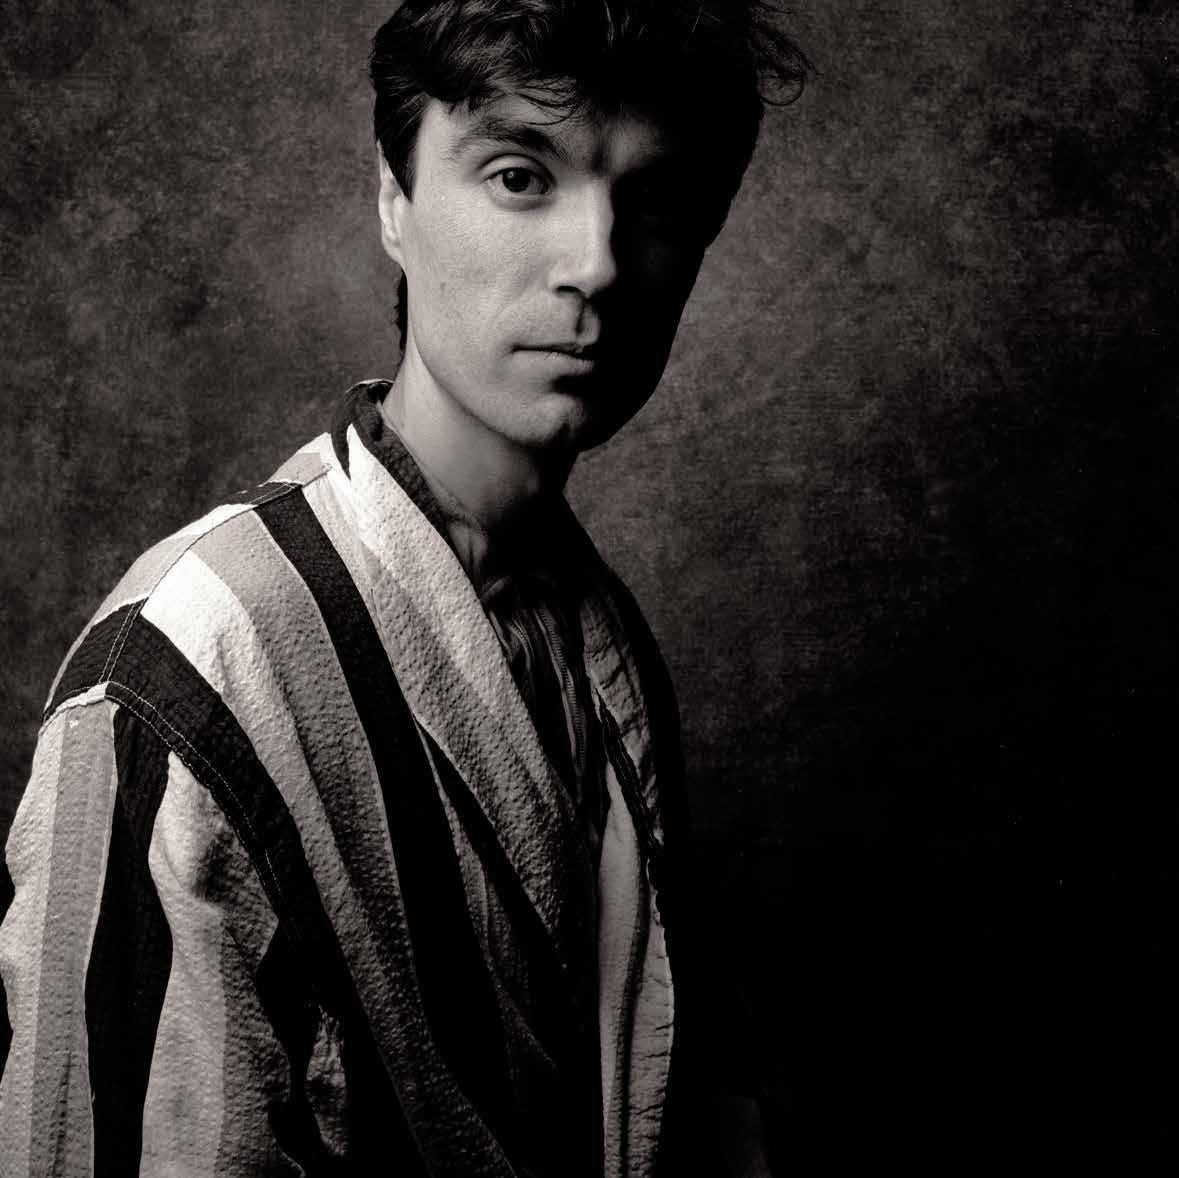 David Byrne ( Talking Heads) - Photograph de William Coupon